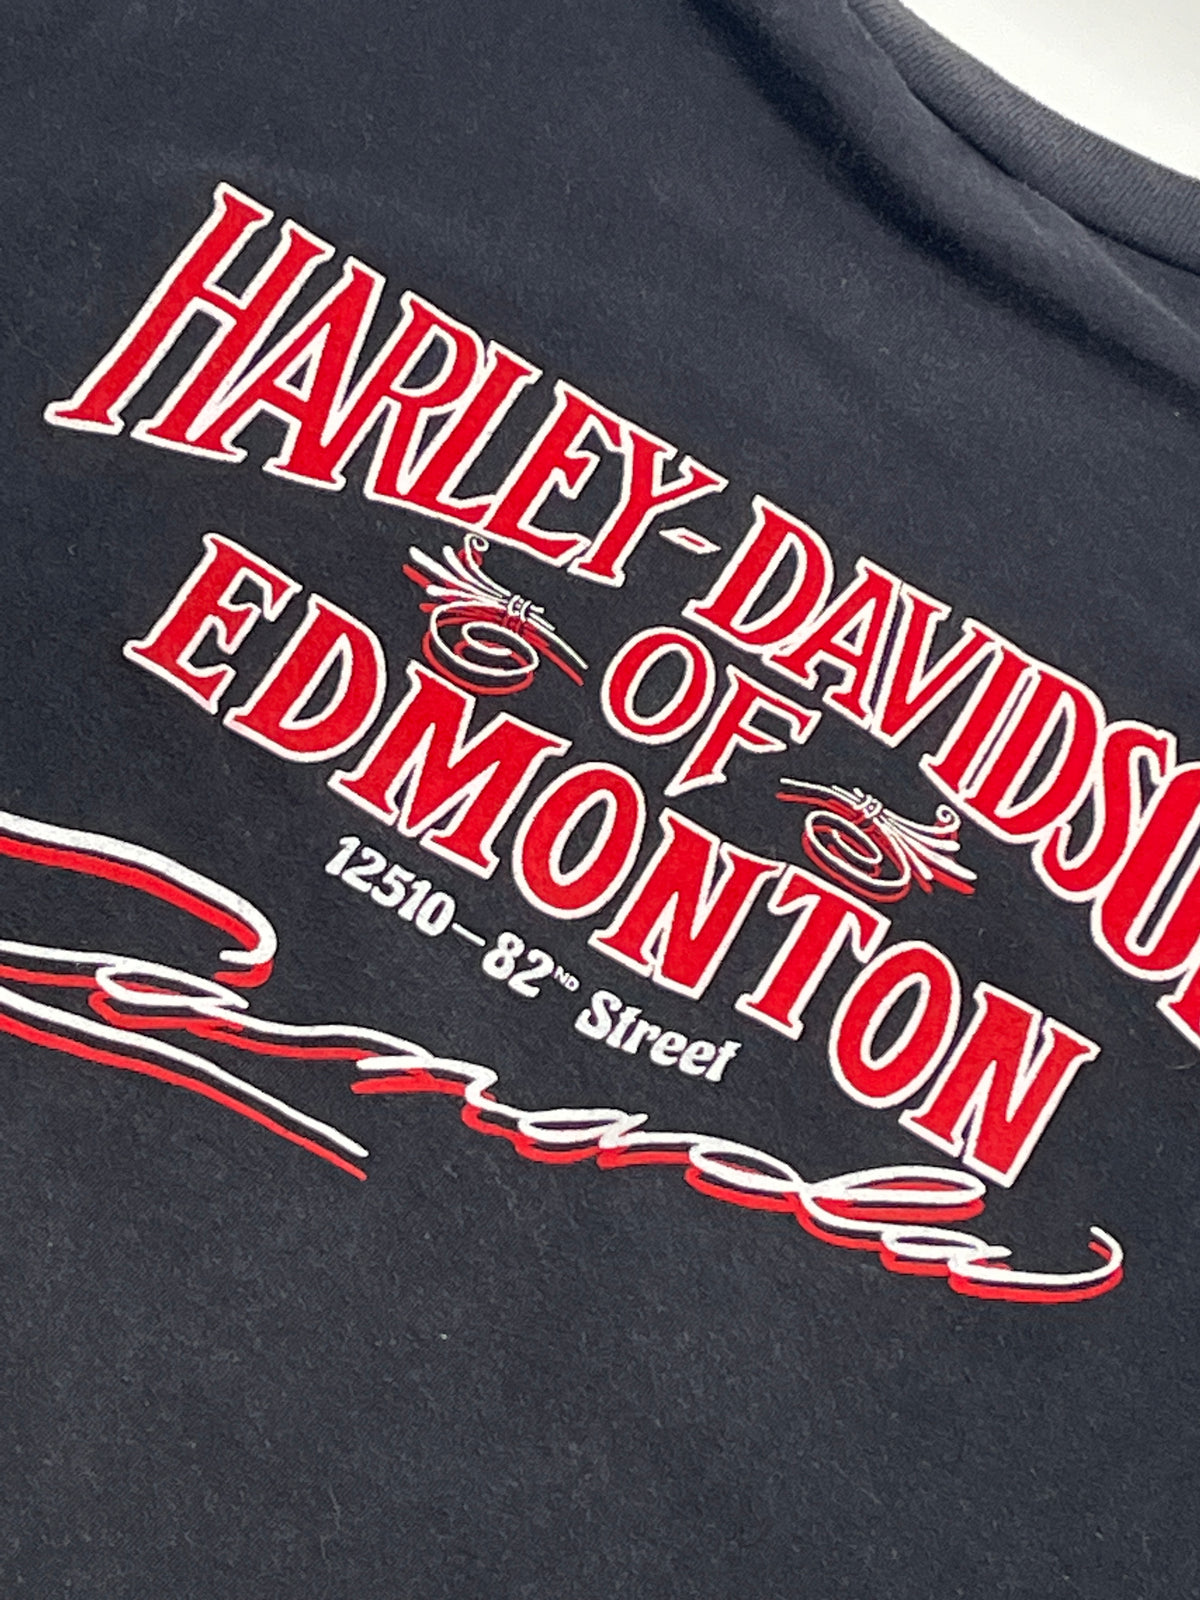 Vintage Harley Davidson I was in Edmonton Tee